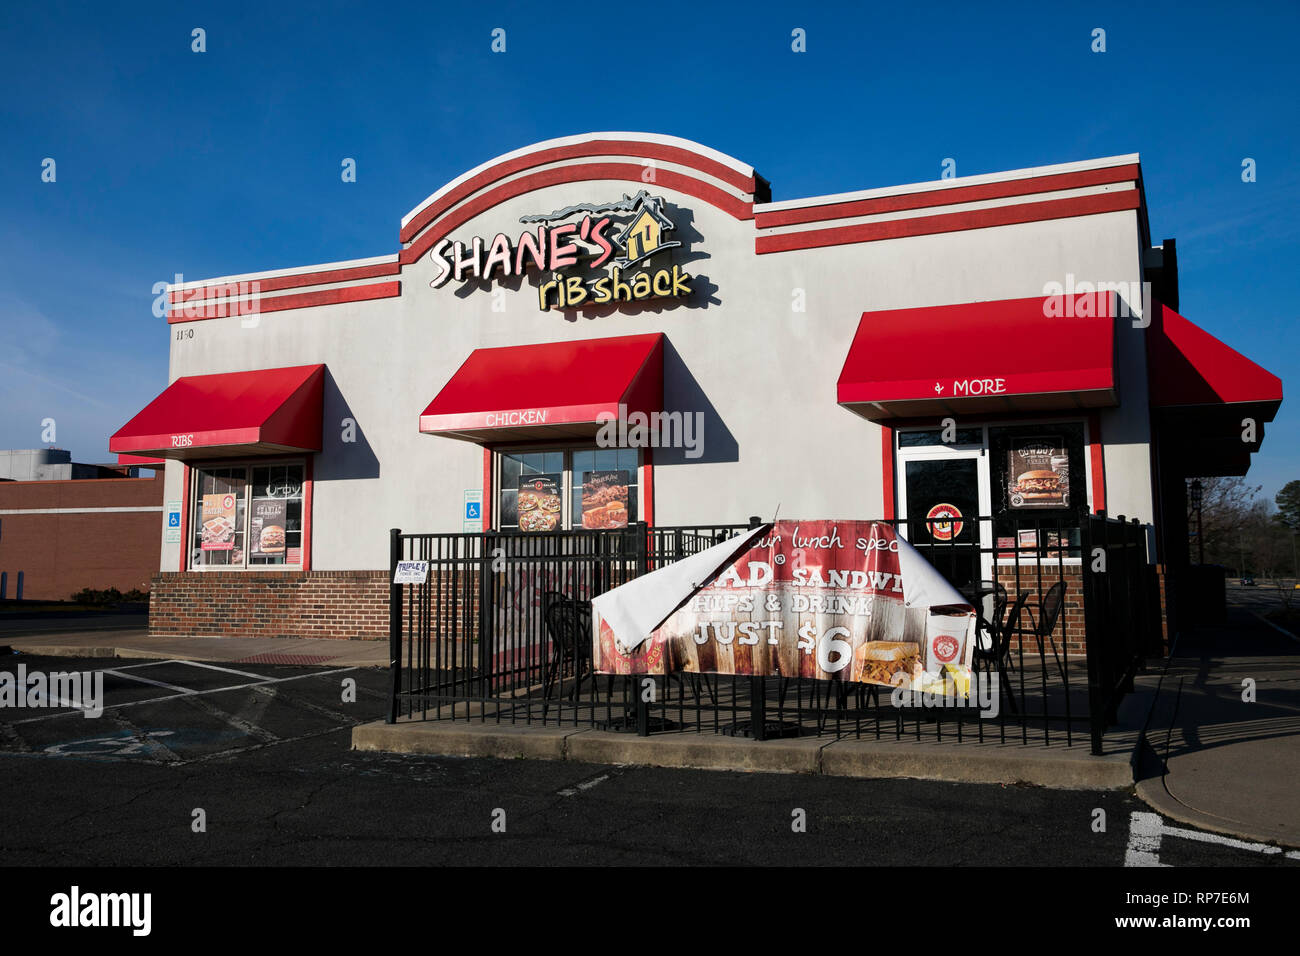 A logo sign outside of a Shane's Rib Shack restaurant location in Fredericksburg, Virginia on February 19, 2019. Stock Photo